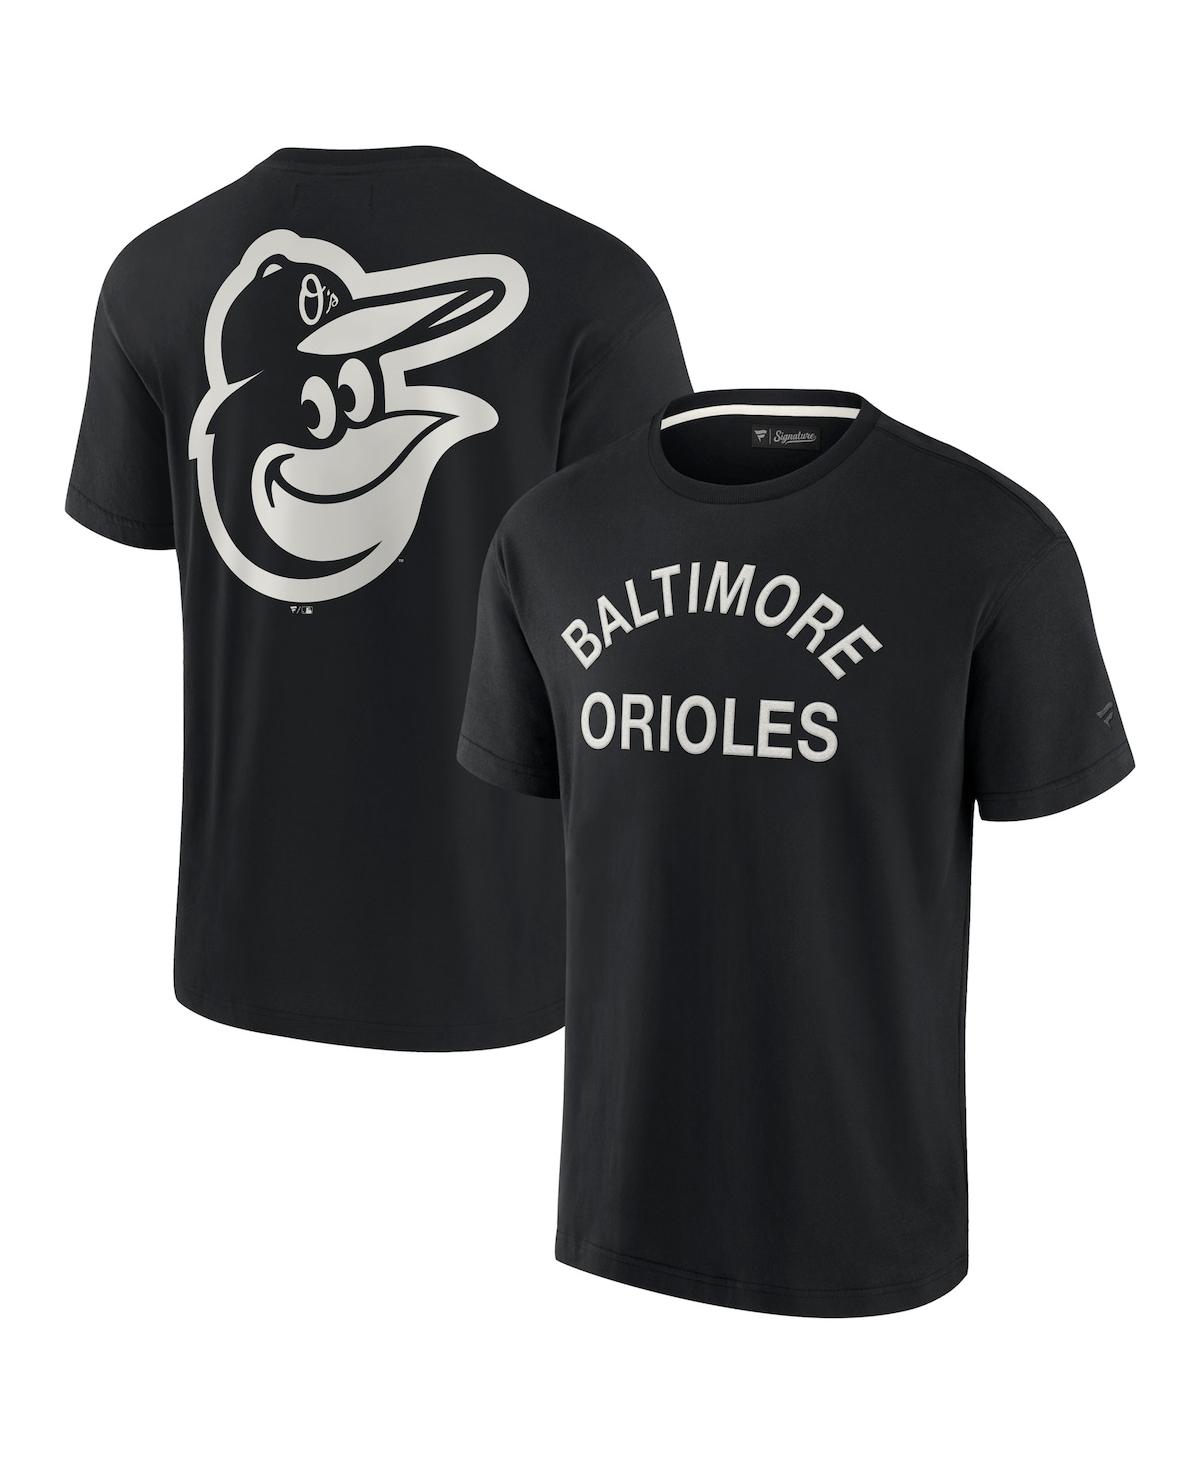 Shop Fanatics Signature Men's And Women's  Black Baltimore Orioles Super Soft Short Sleeve T-shirt